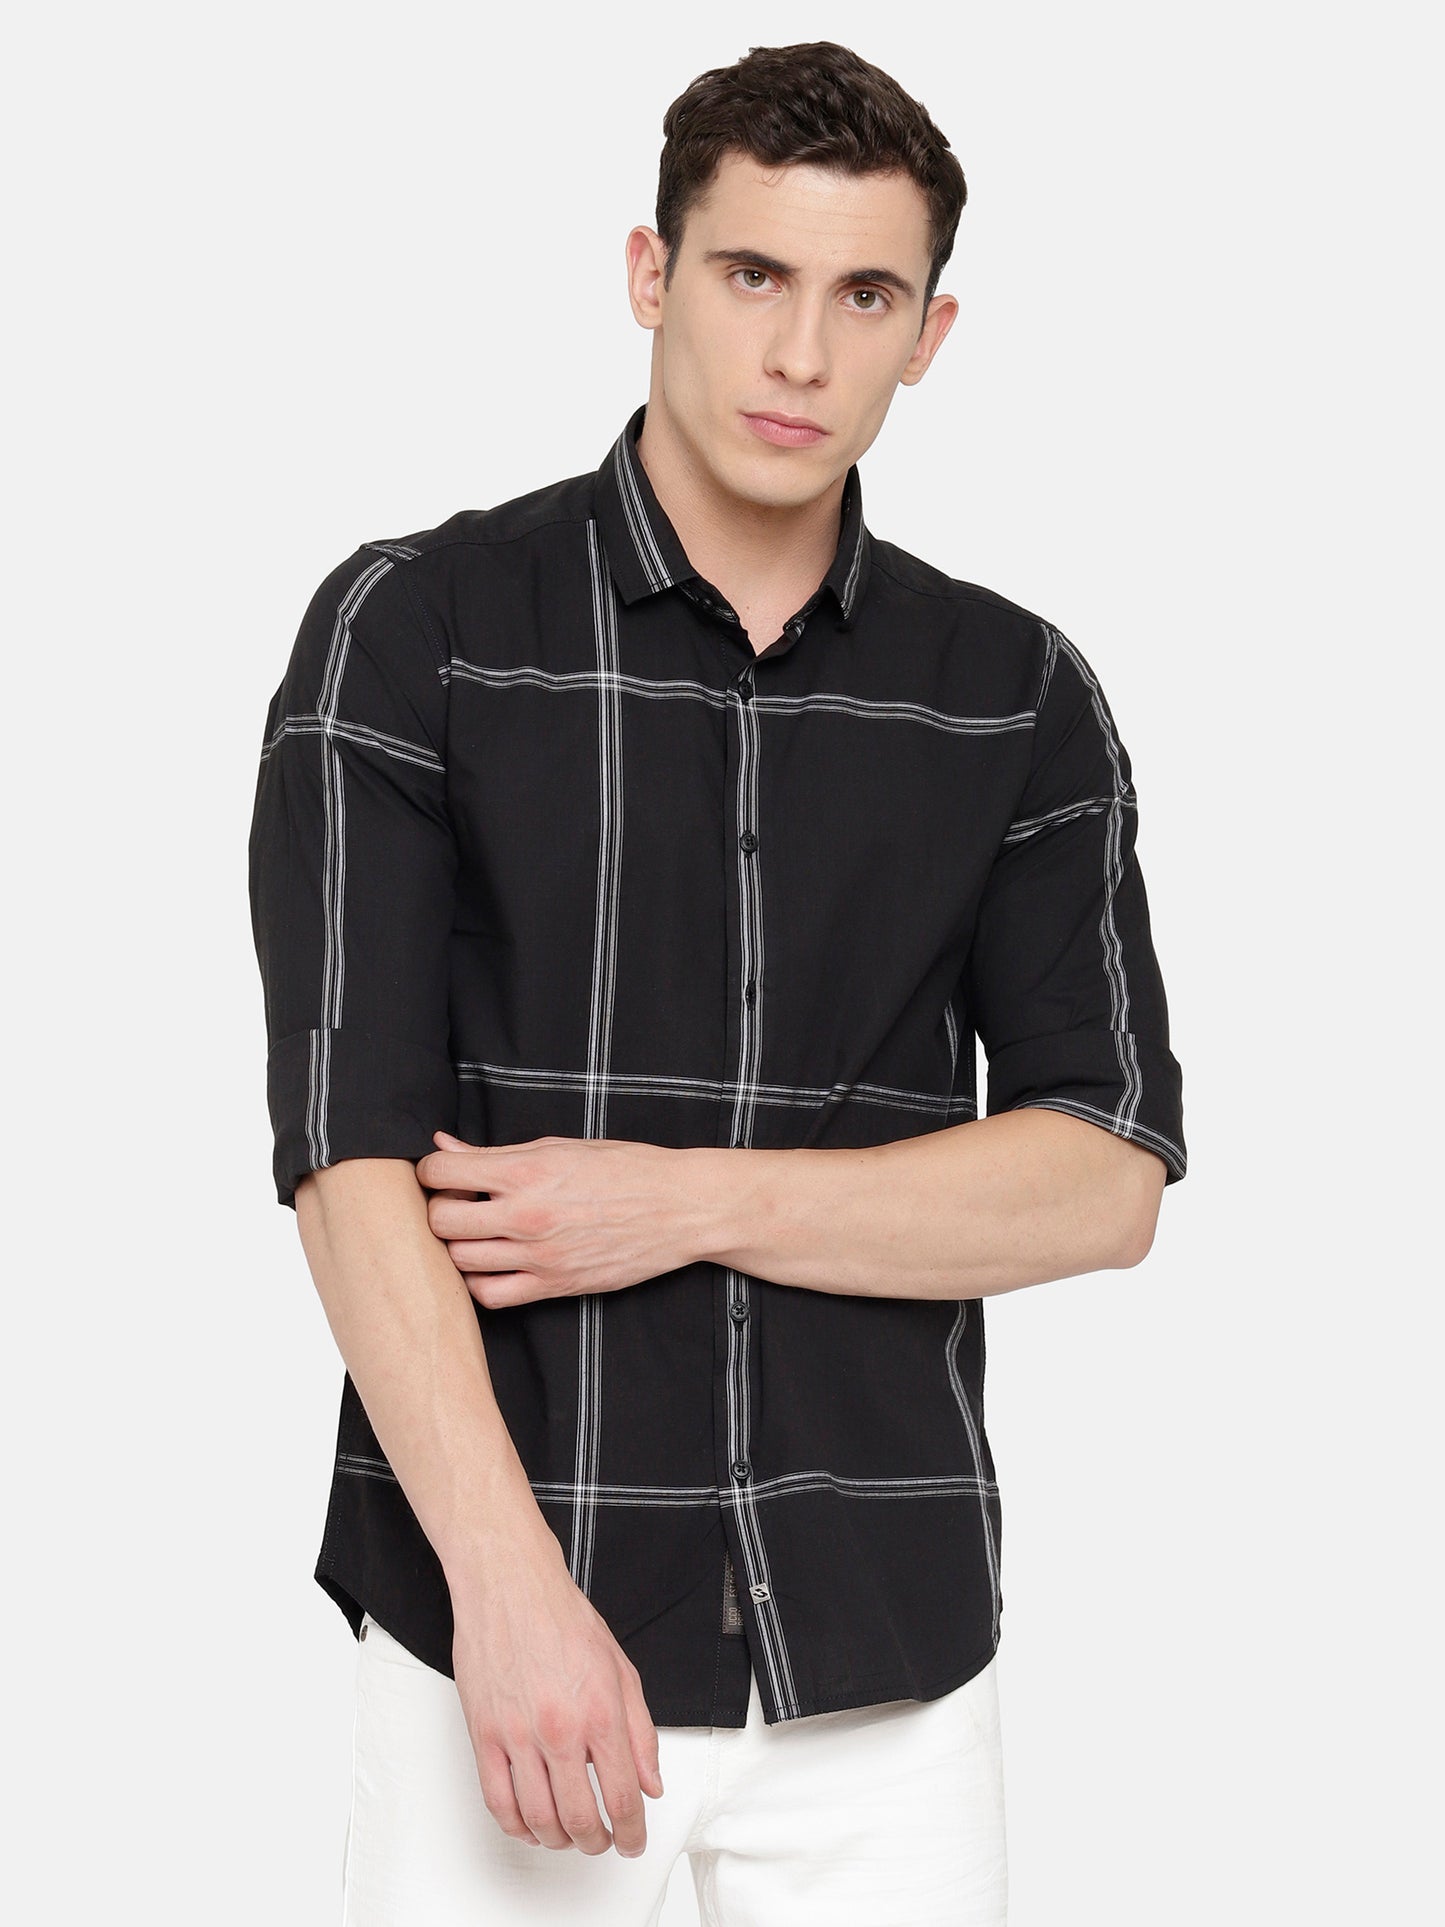 Black Checkered Shirt